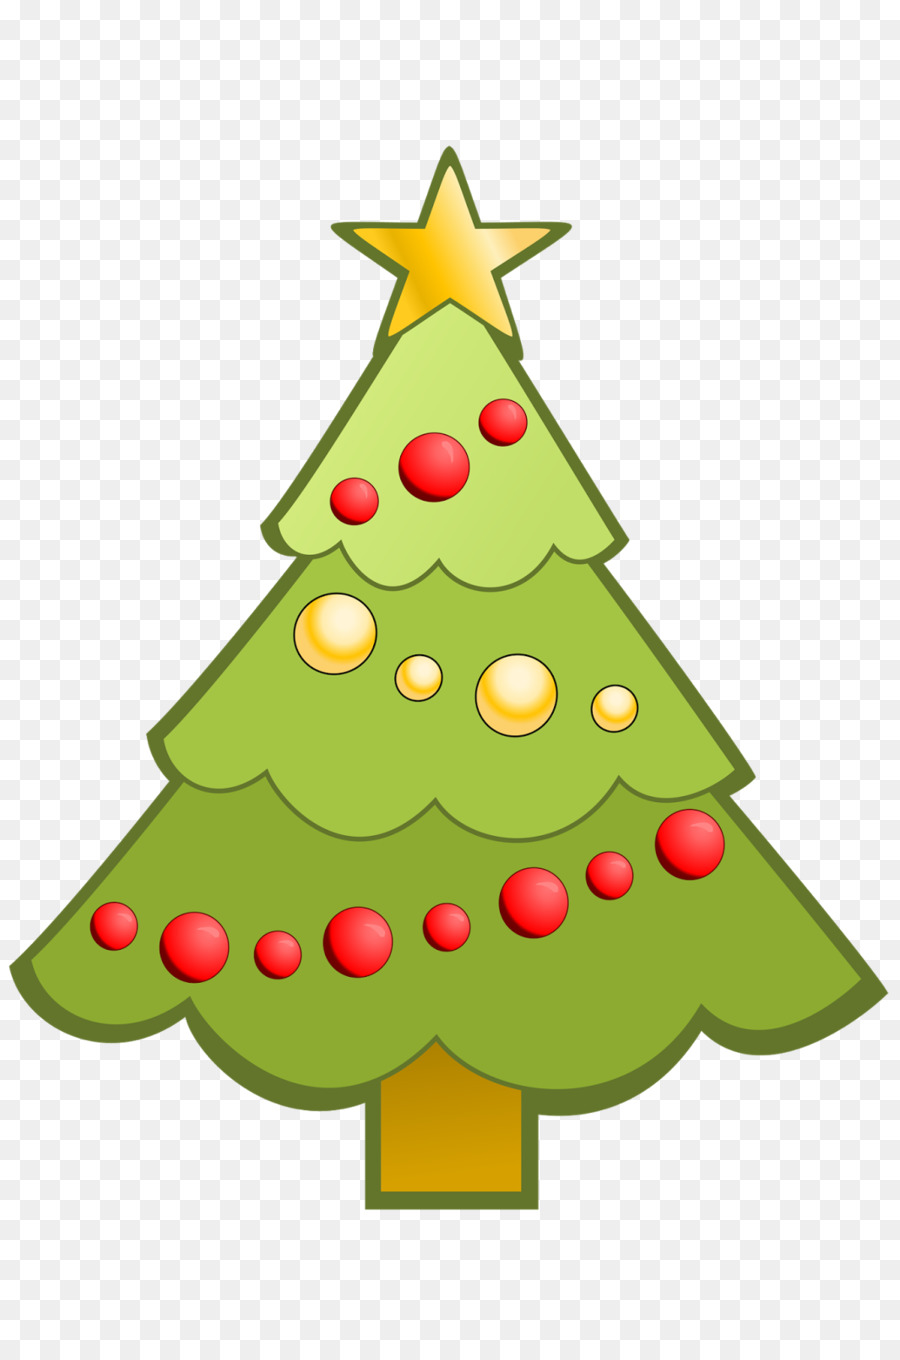 Christmas tree Clip art - christmas tree png download - 1066*1600 - Free Transparent Christmas  png Download.